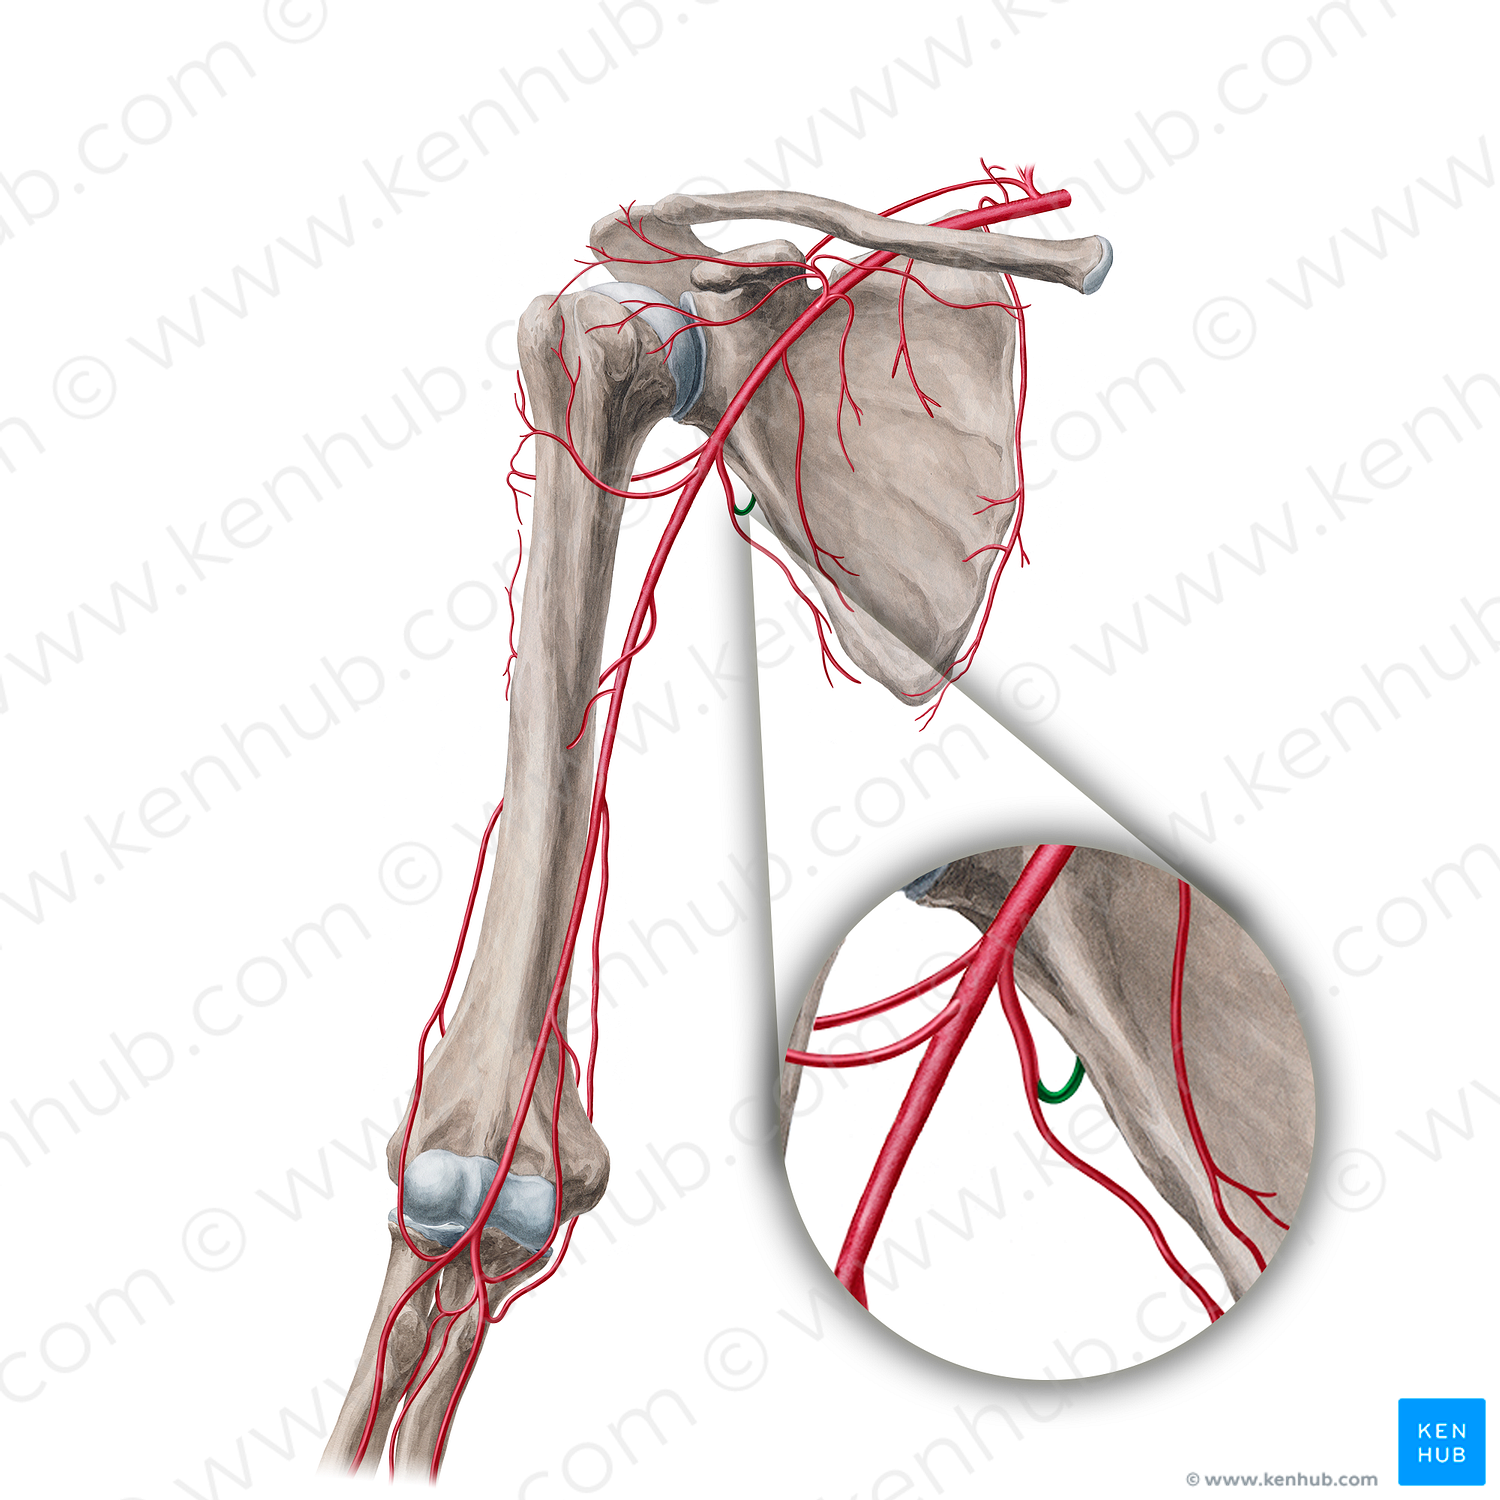 Circumflex scapular artery (#18847)